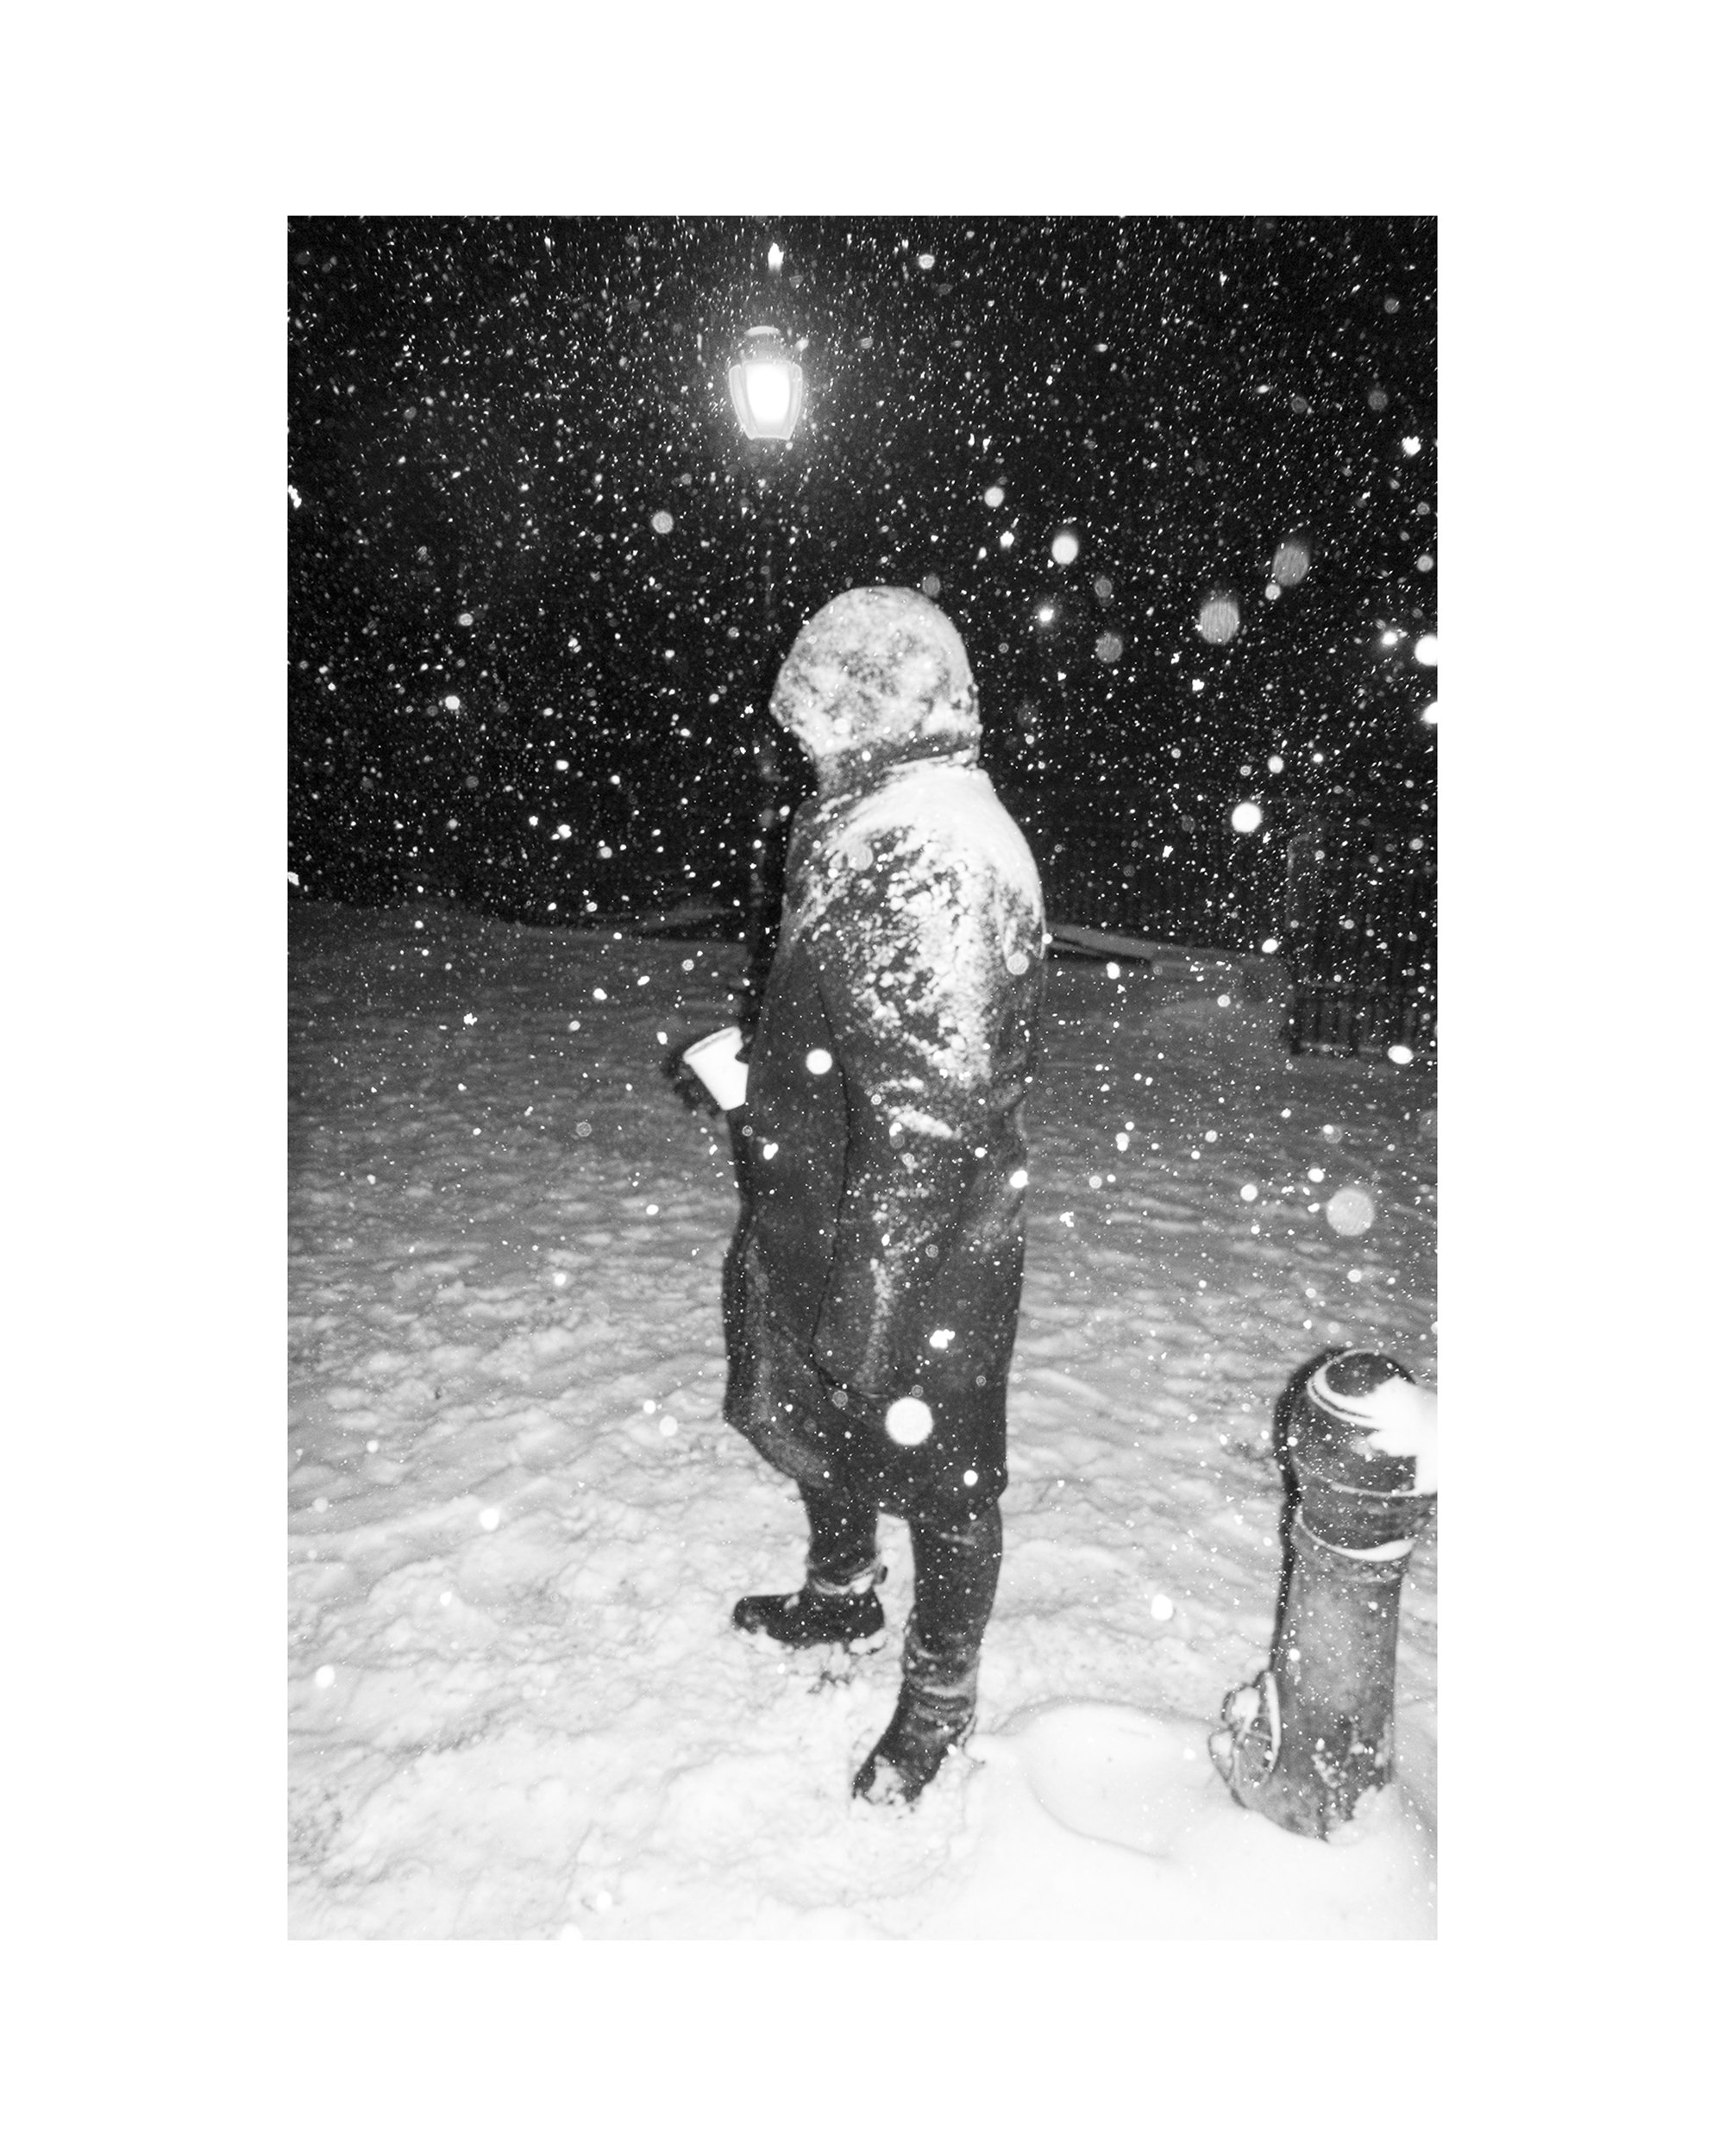   Elle in the Snow at Maria Hernandez, 12.16.20  